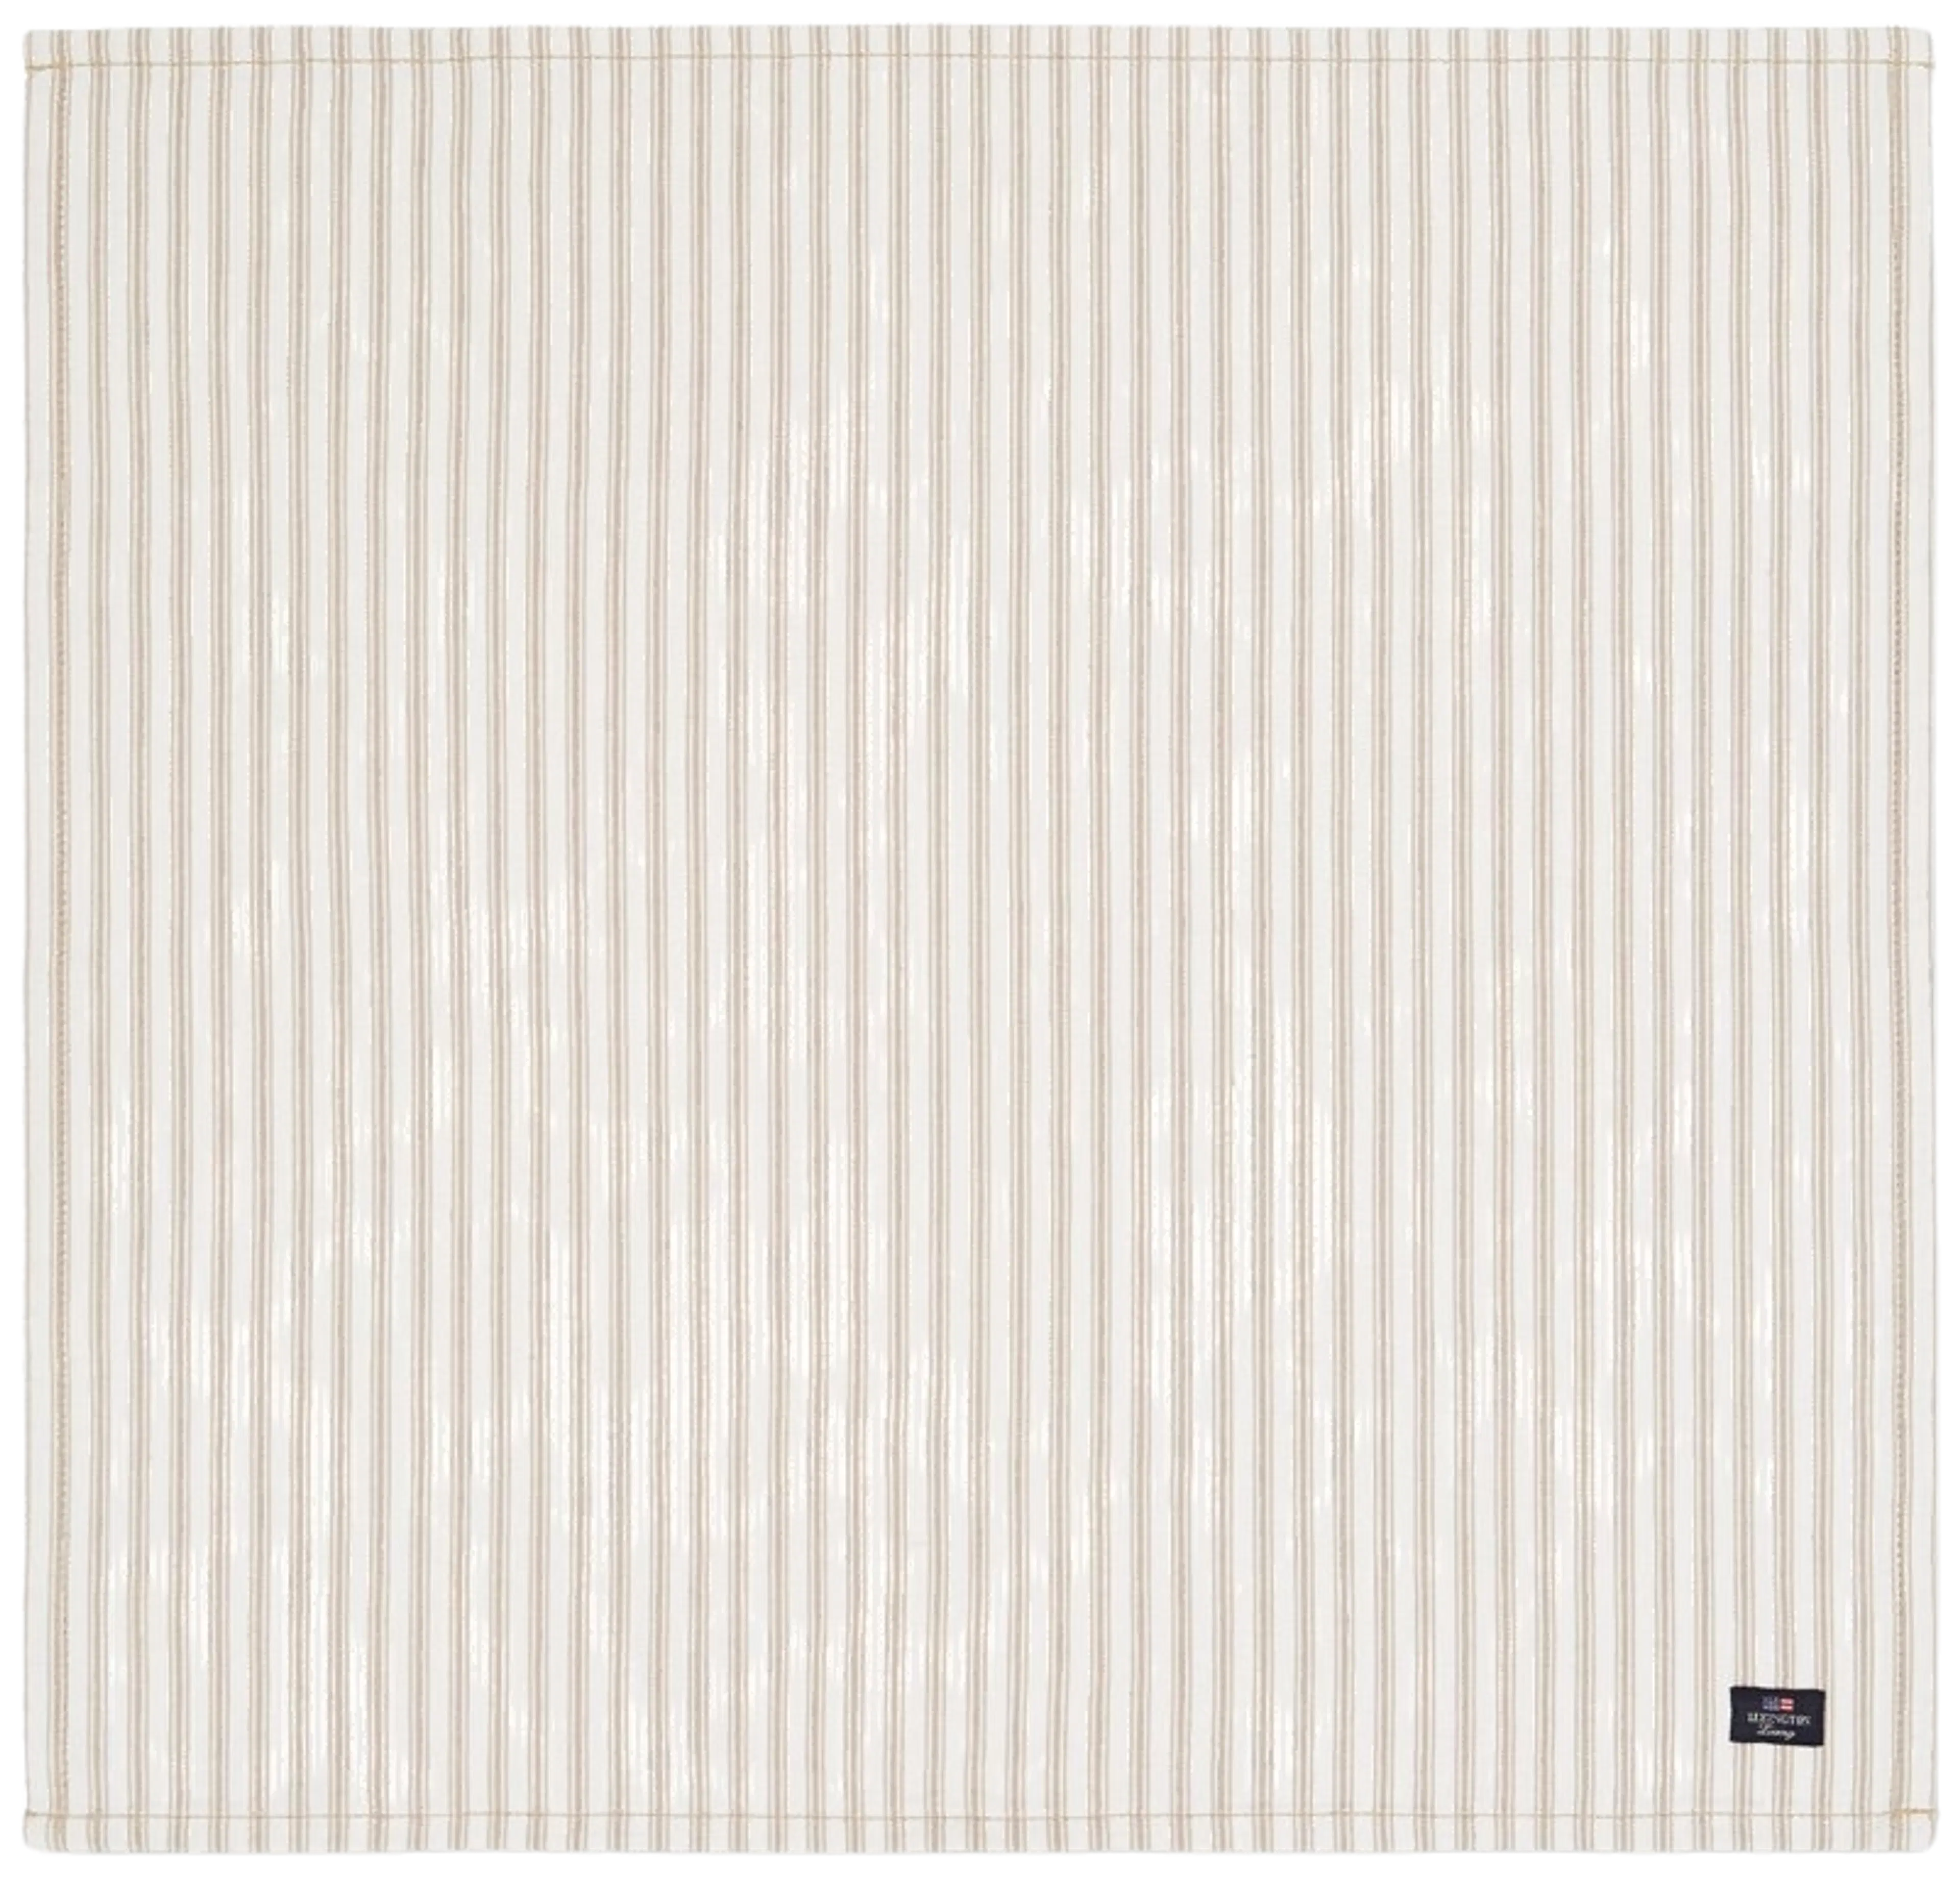 Lexington Icons kalanruoto lautasliina 50x50cm beige/valkoinen